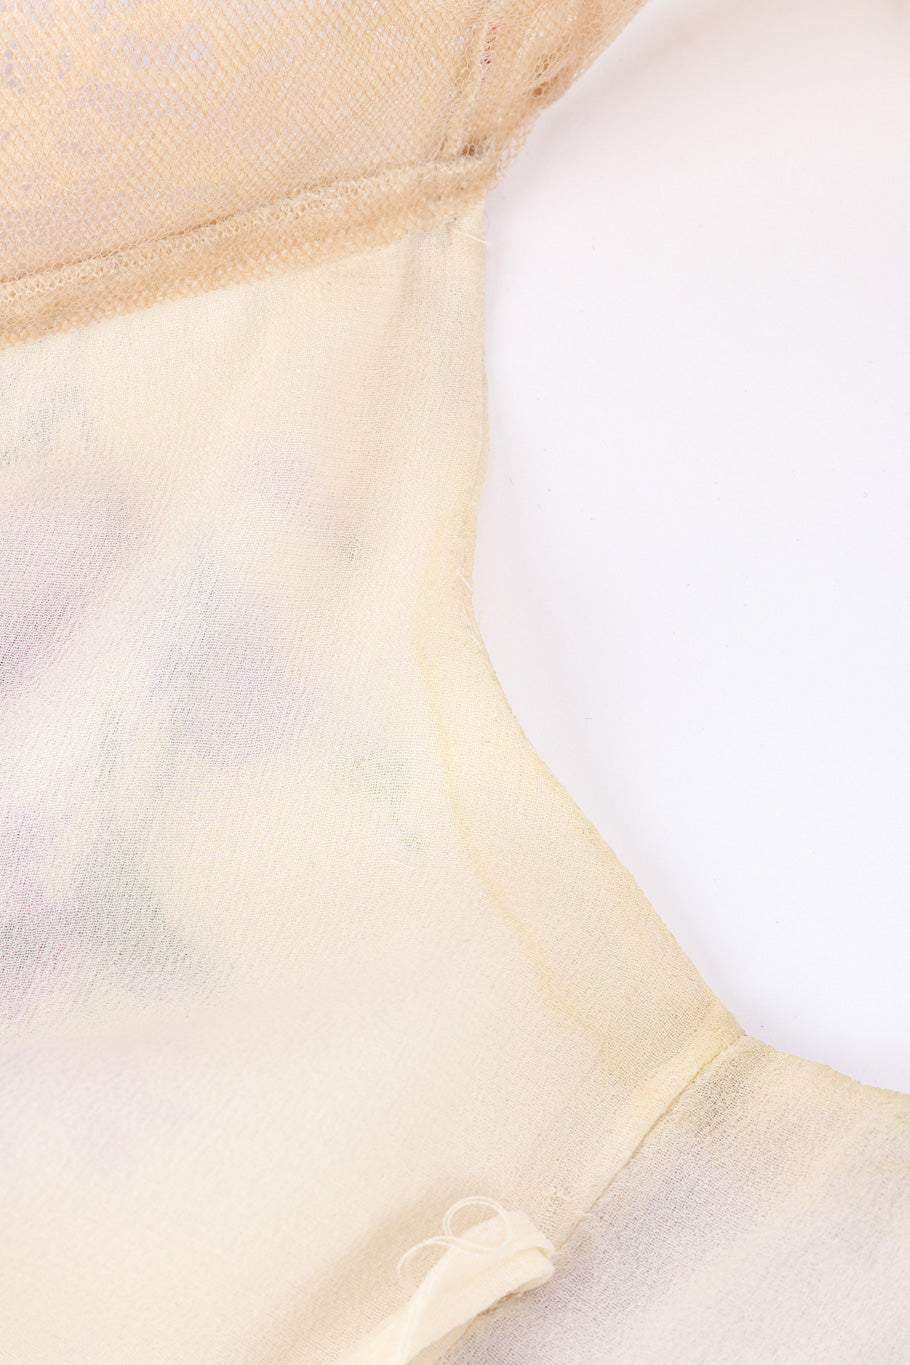 Vintage Valentino Floral Lace Maxi Dress yellow stain near armpit closeup @Recessla